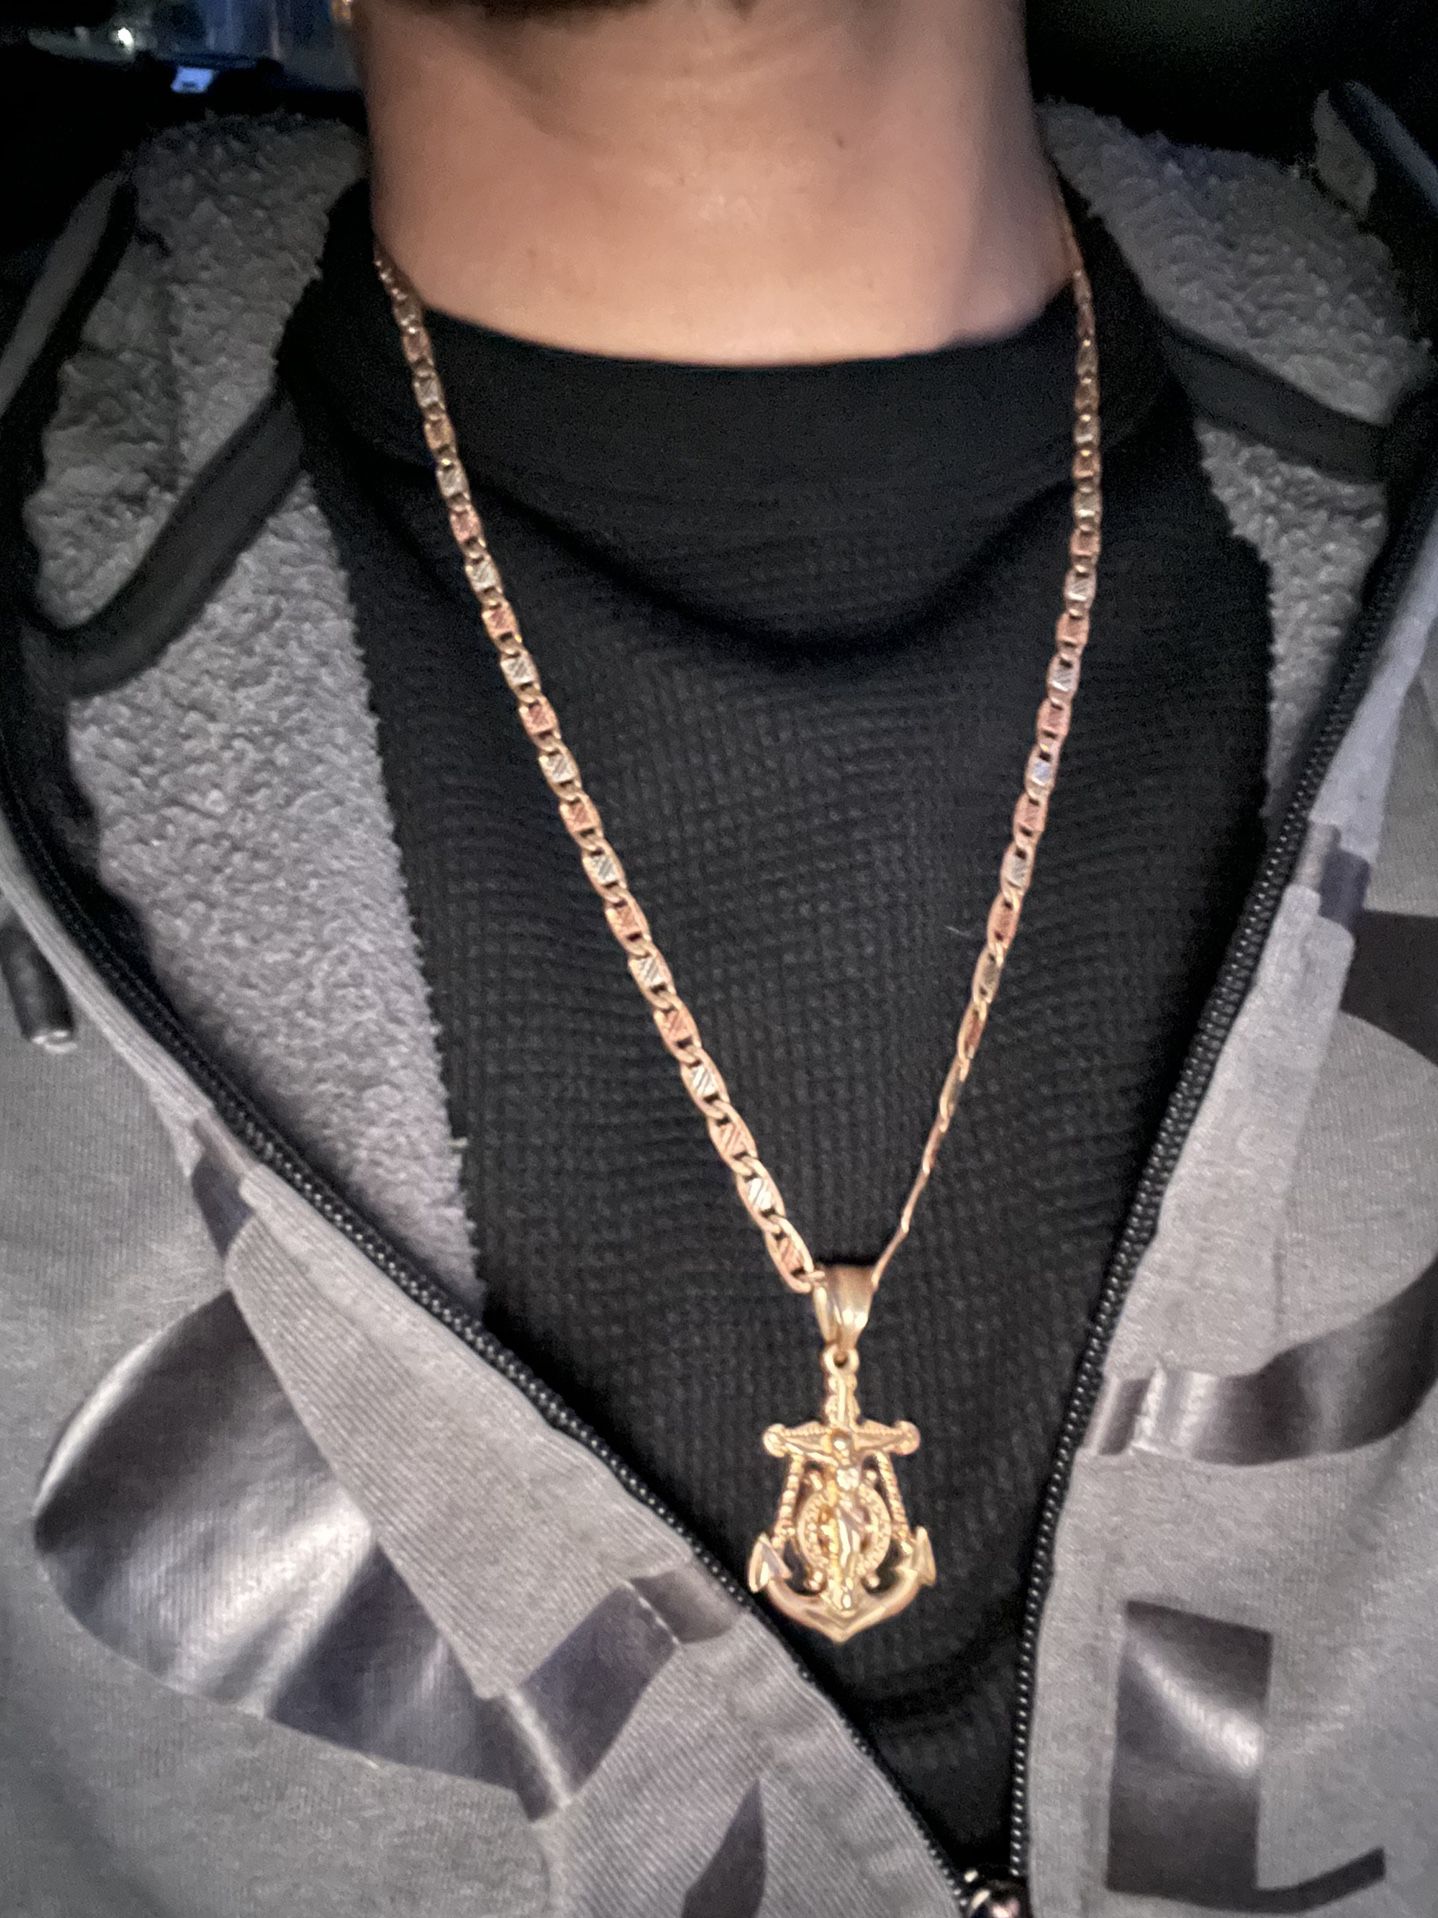 14k Gold Chain/ Necklace & Pendant